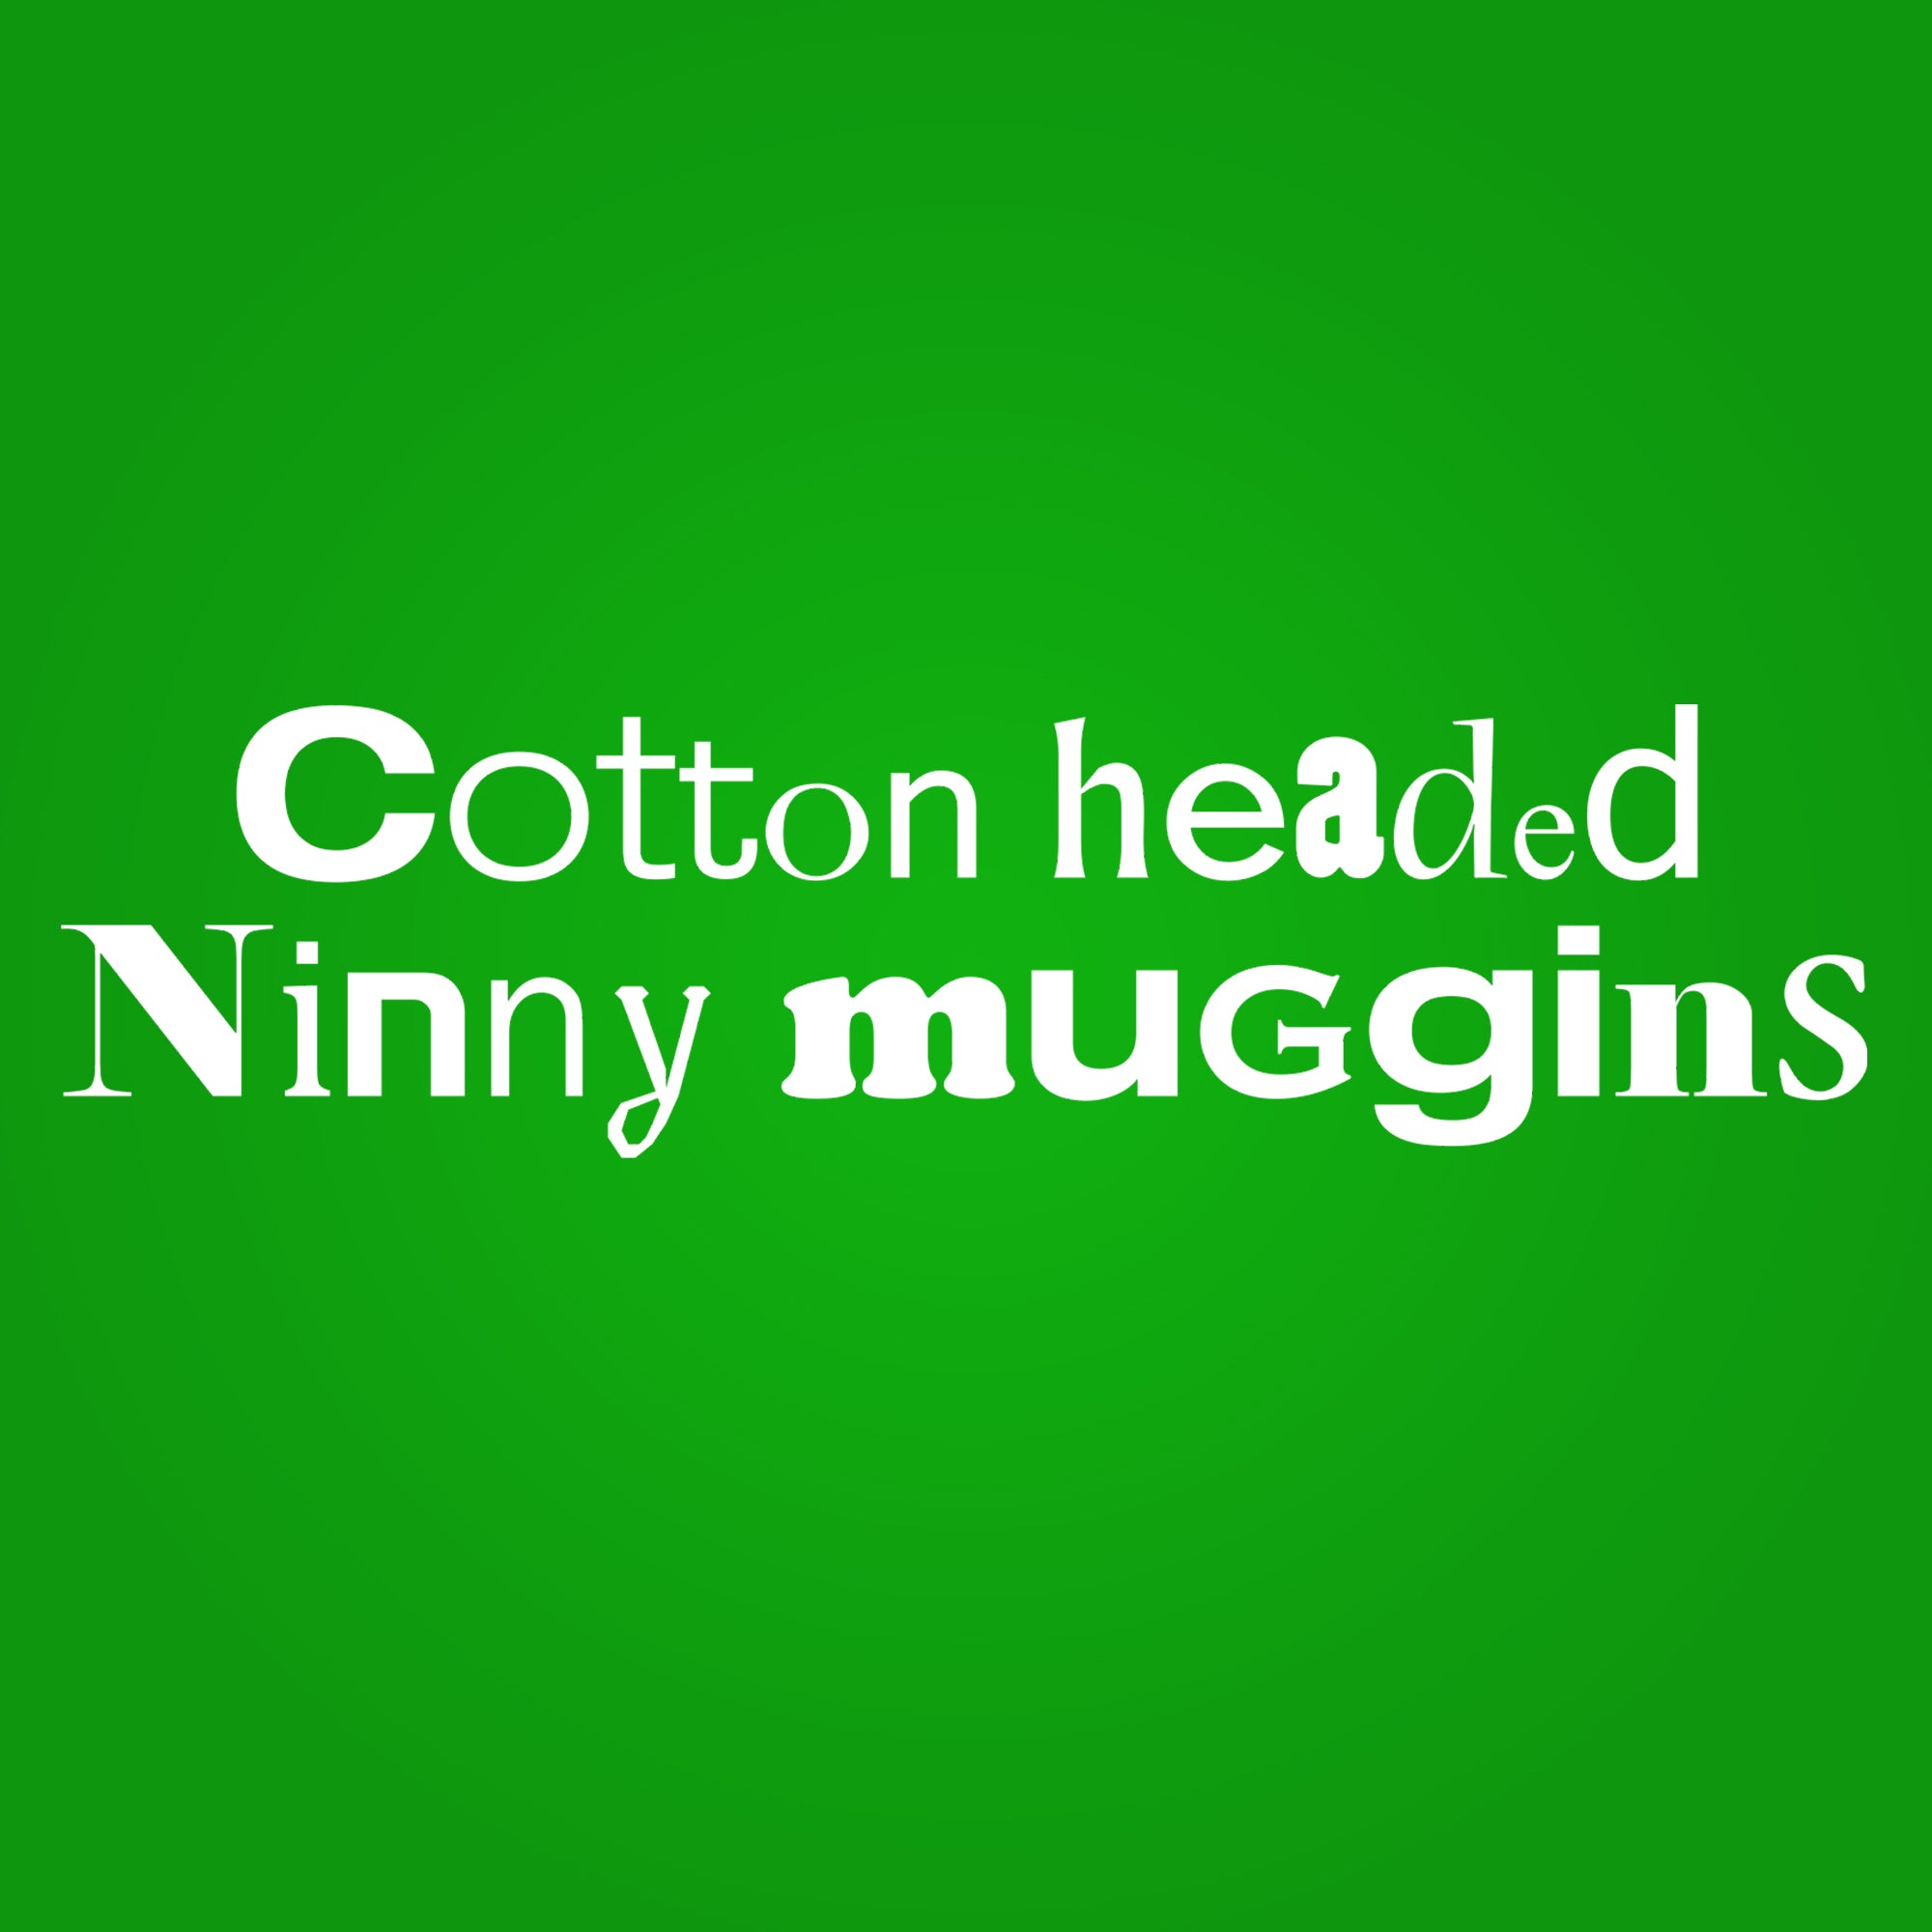 Cotton Heeded Ninny Muggins Tshirt - Donkey Tees